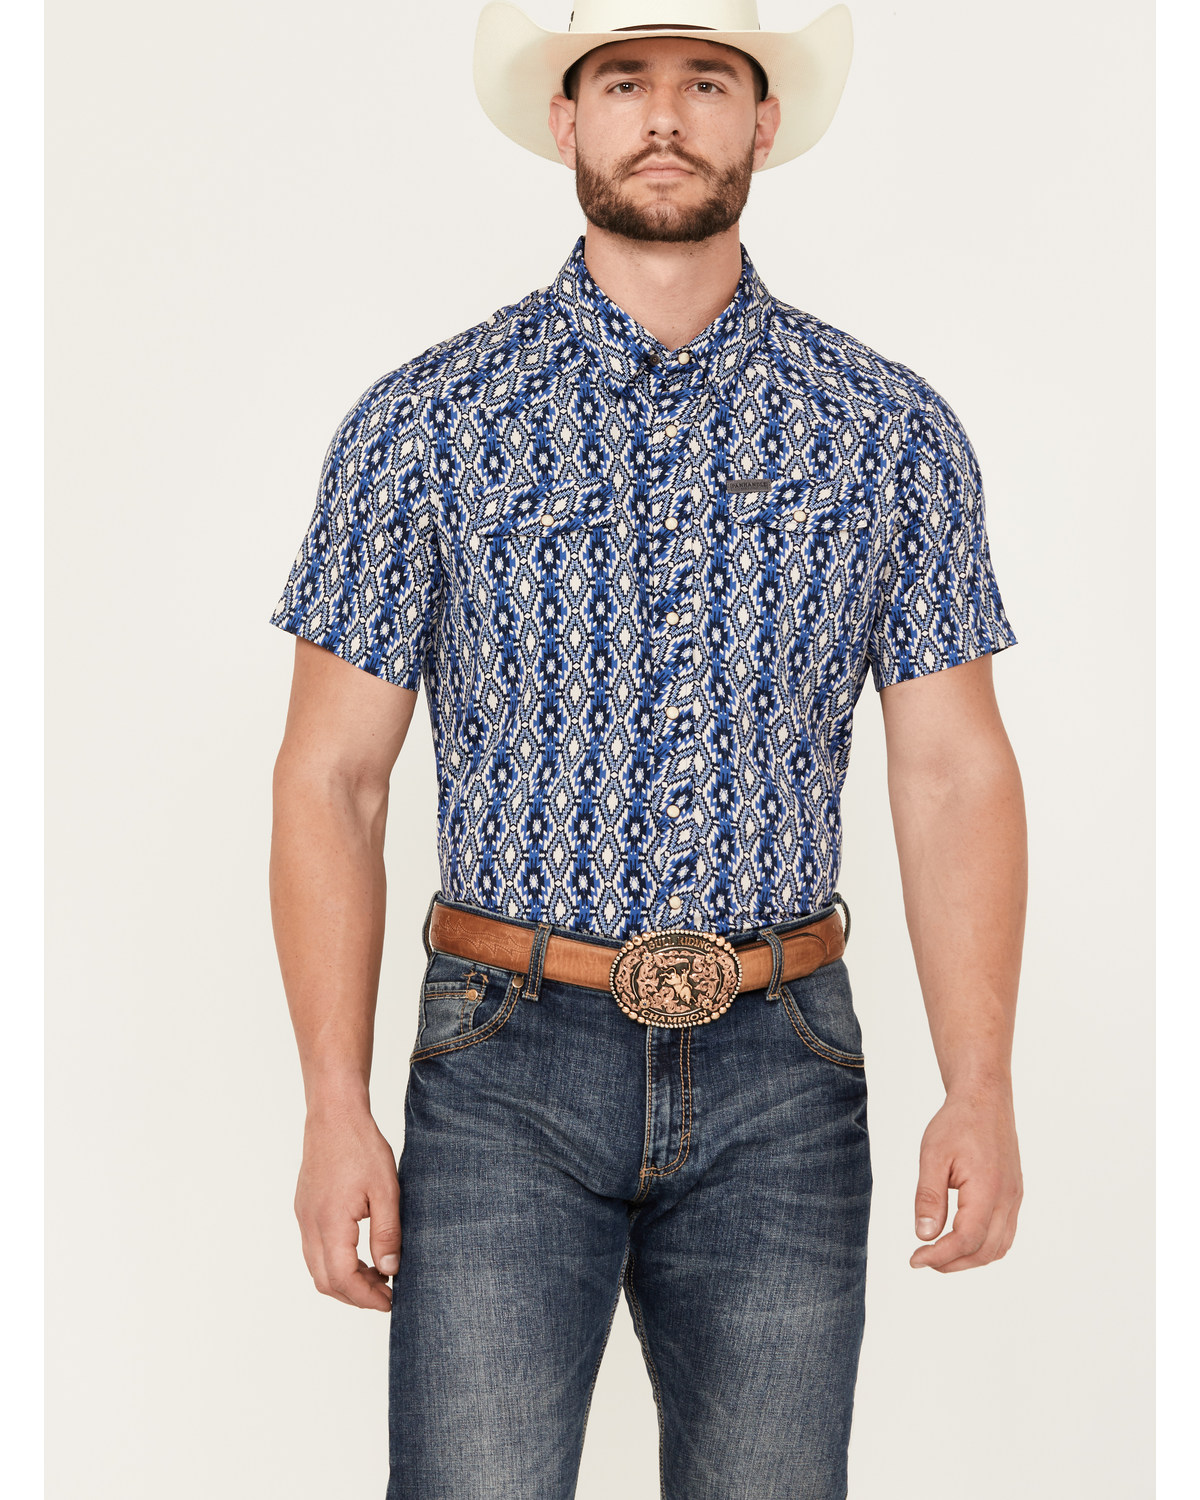 Panhandle Men's Southwestern Print Short Sleeve Snap Performance Western Shirt